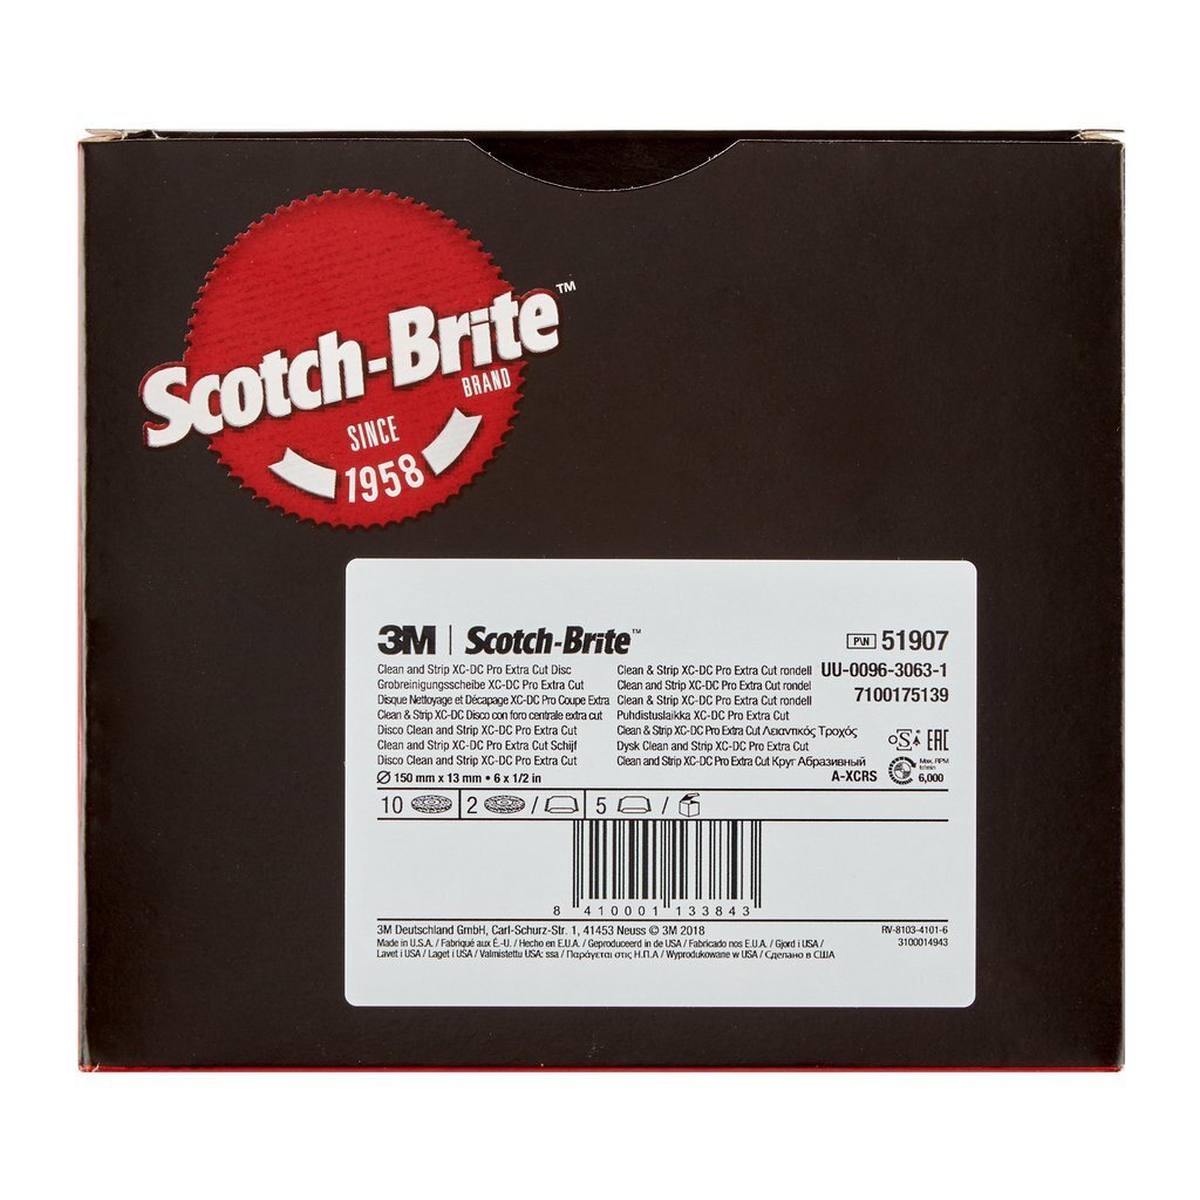 3M Scotch-Brite Grobreinigungsscheibe XT-DC Pro Extra Cut, 150 mm x 13 mm, A, extra coarse